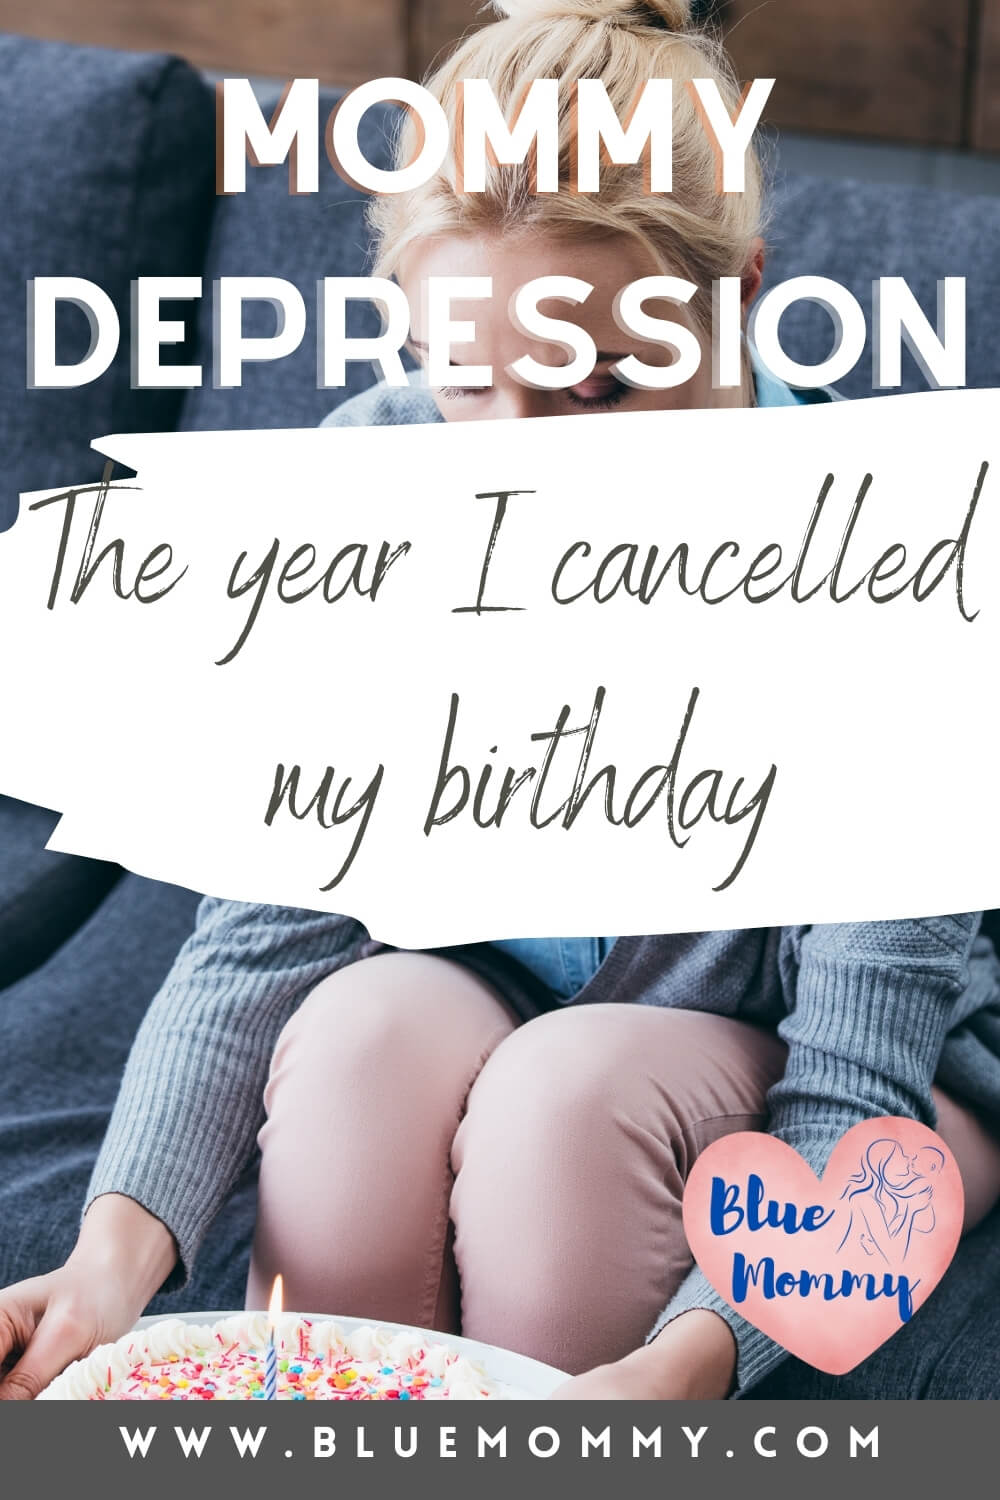 Mommy depression - the year I cancelled my birthday